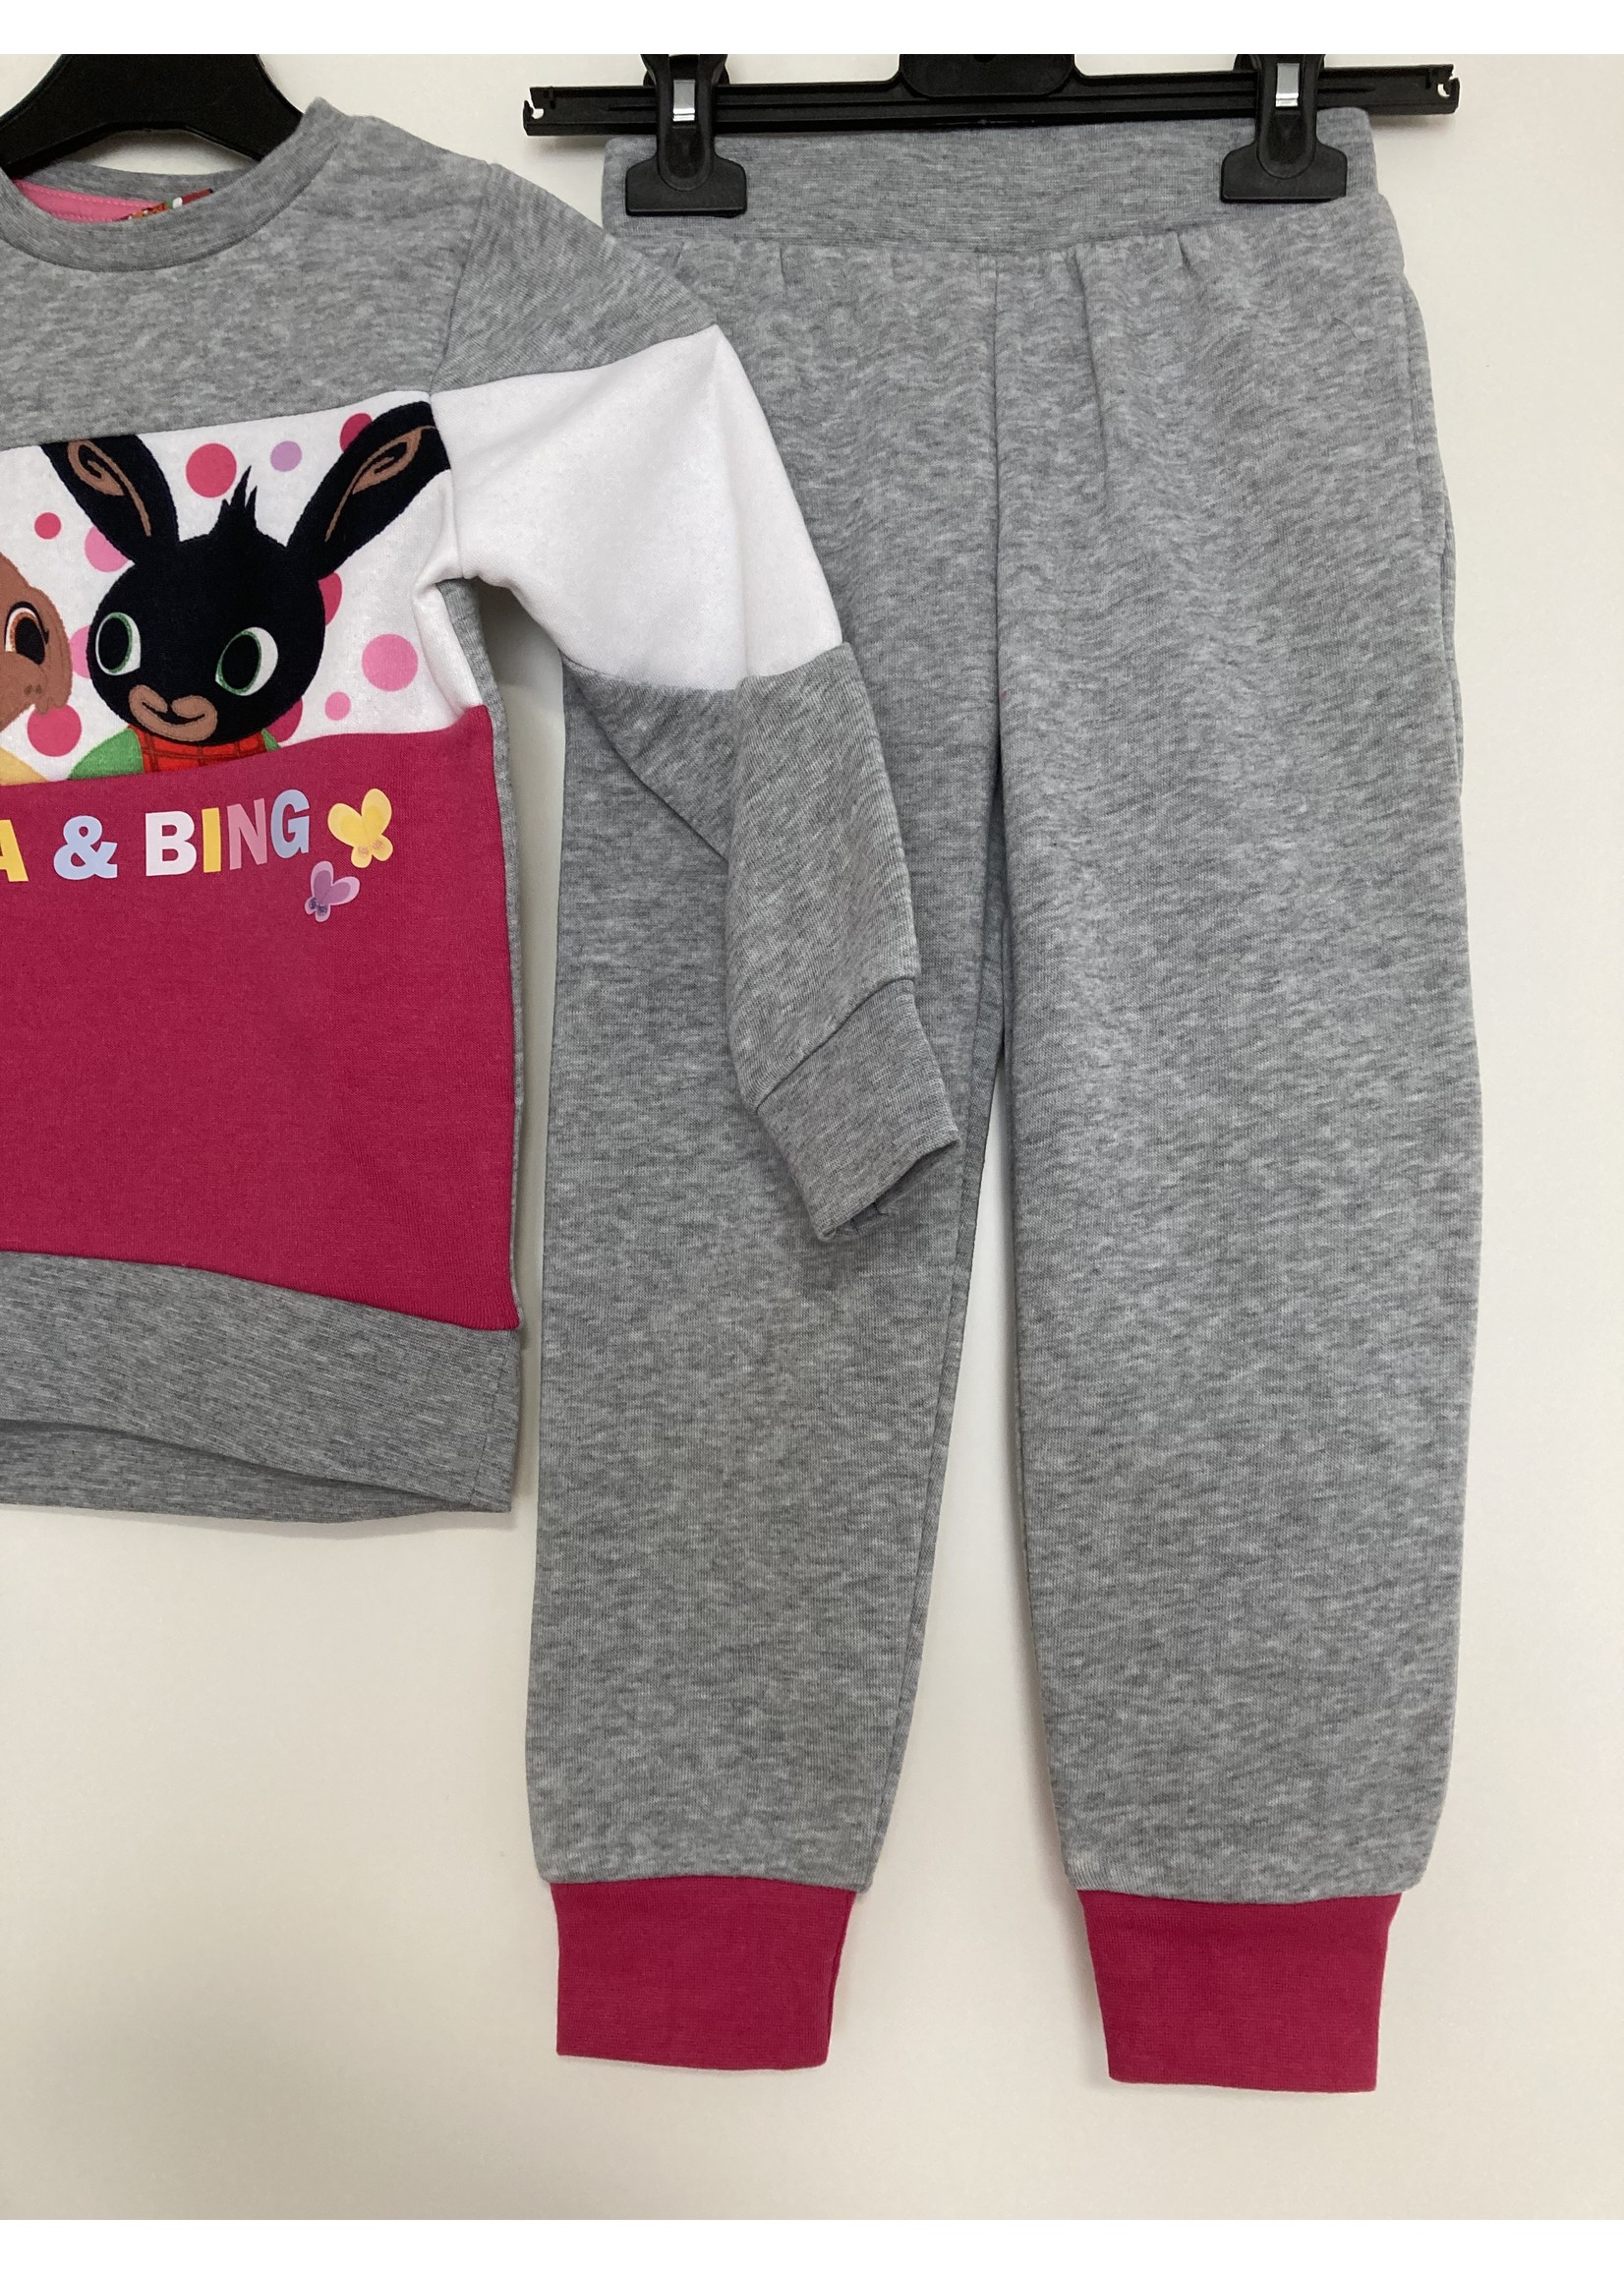 Bing Bunny Bing jogging suit from Bing gray